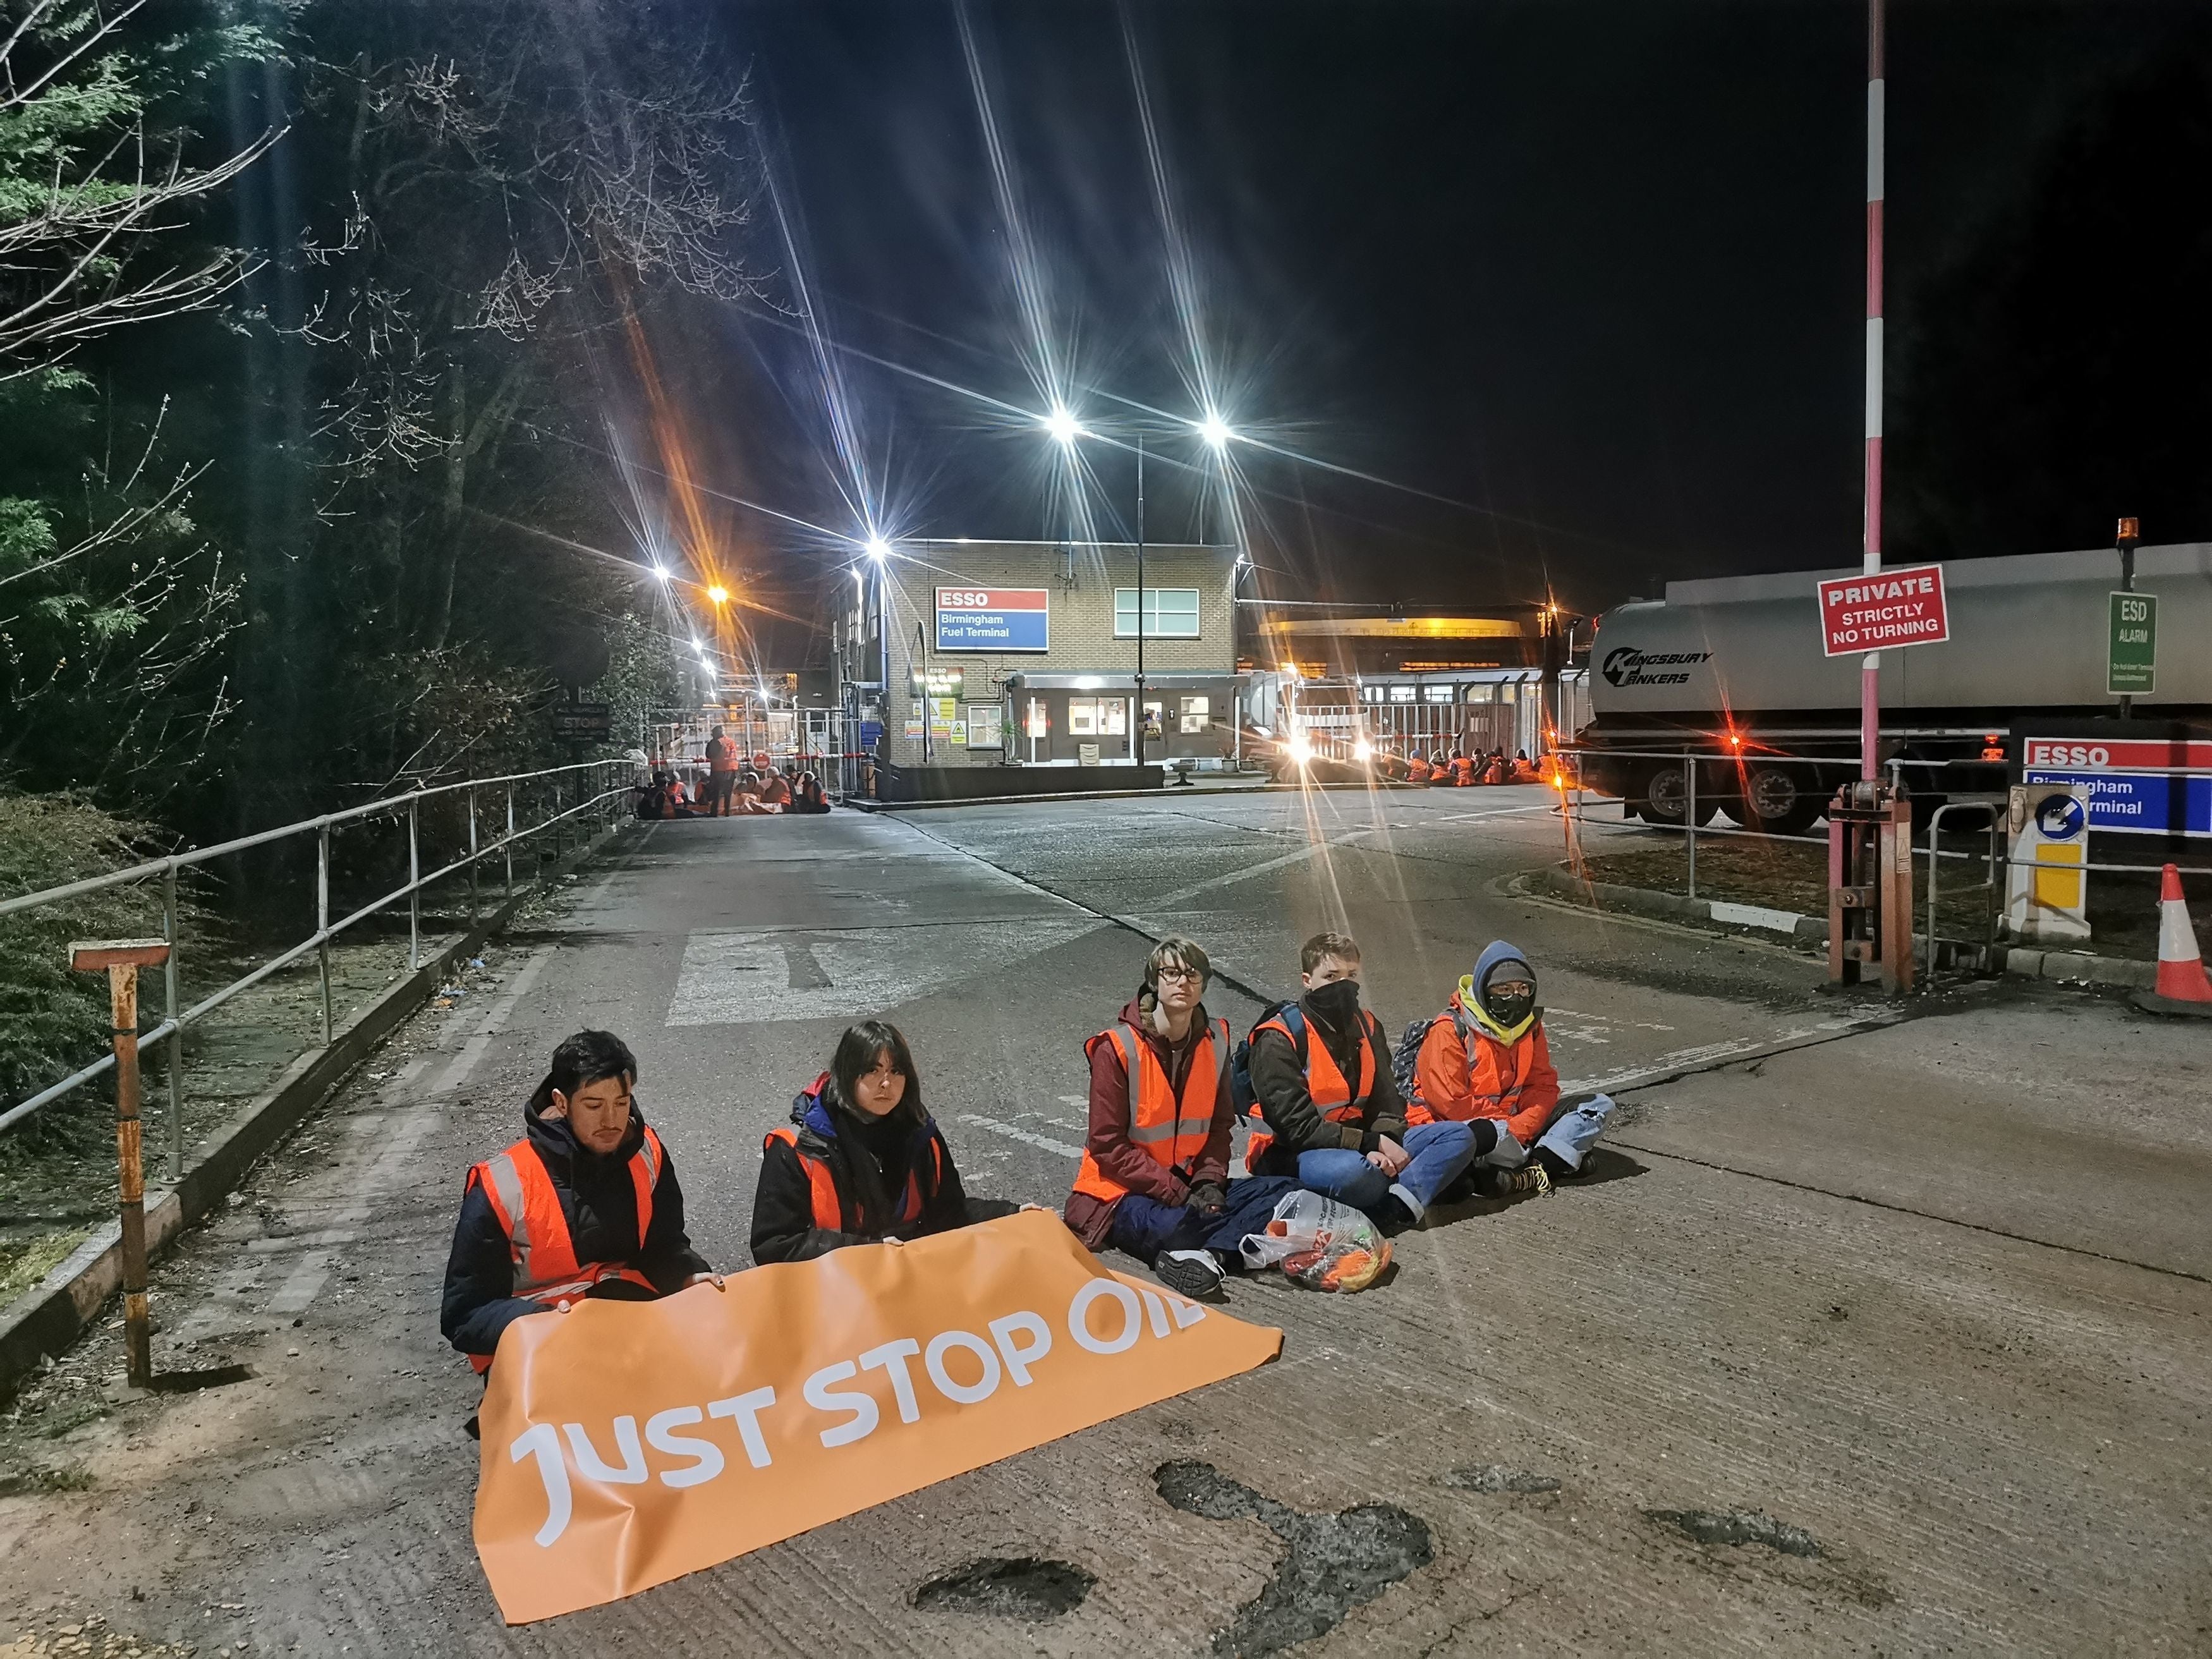 Just Stop Oil activists during their blockade of Esso Birmngham Fuel Terminal